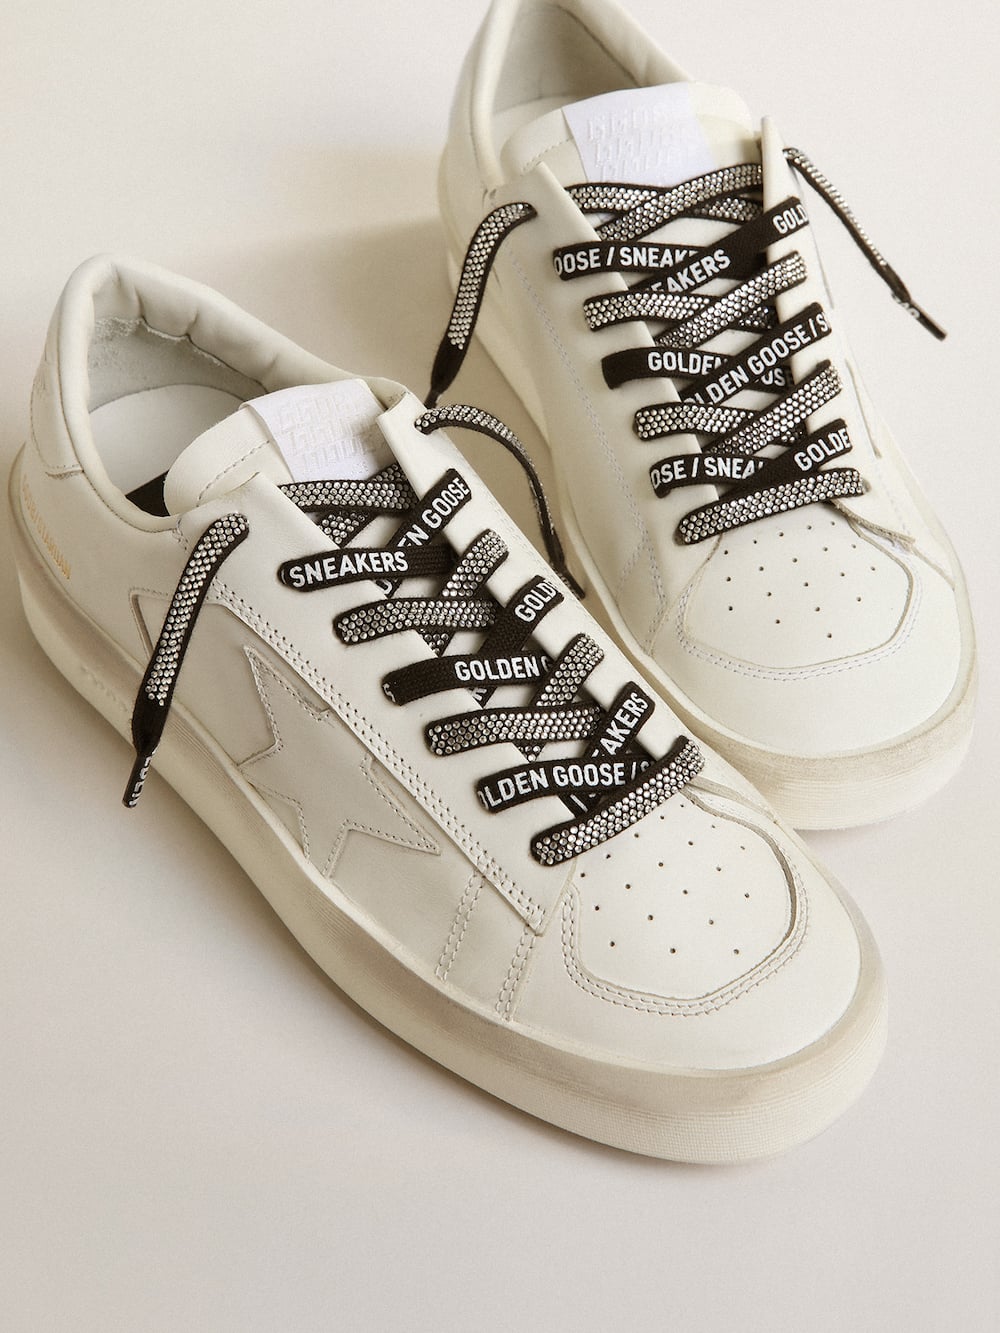 Golden Goose - Lacets noirs avec strass et inscriptions Golden Goose Sneakers blanches contrastées in 